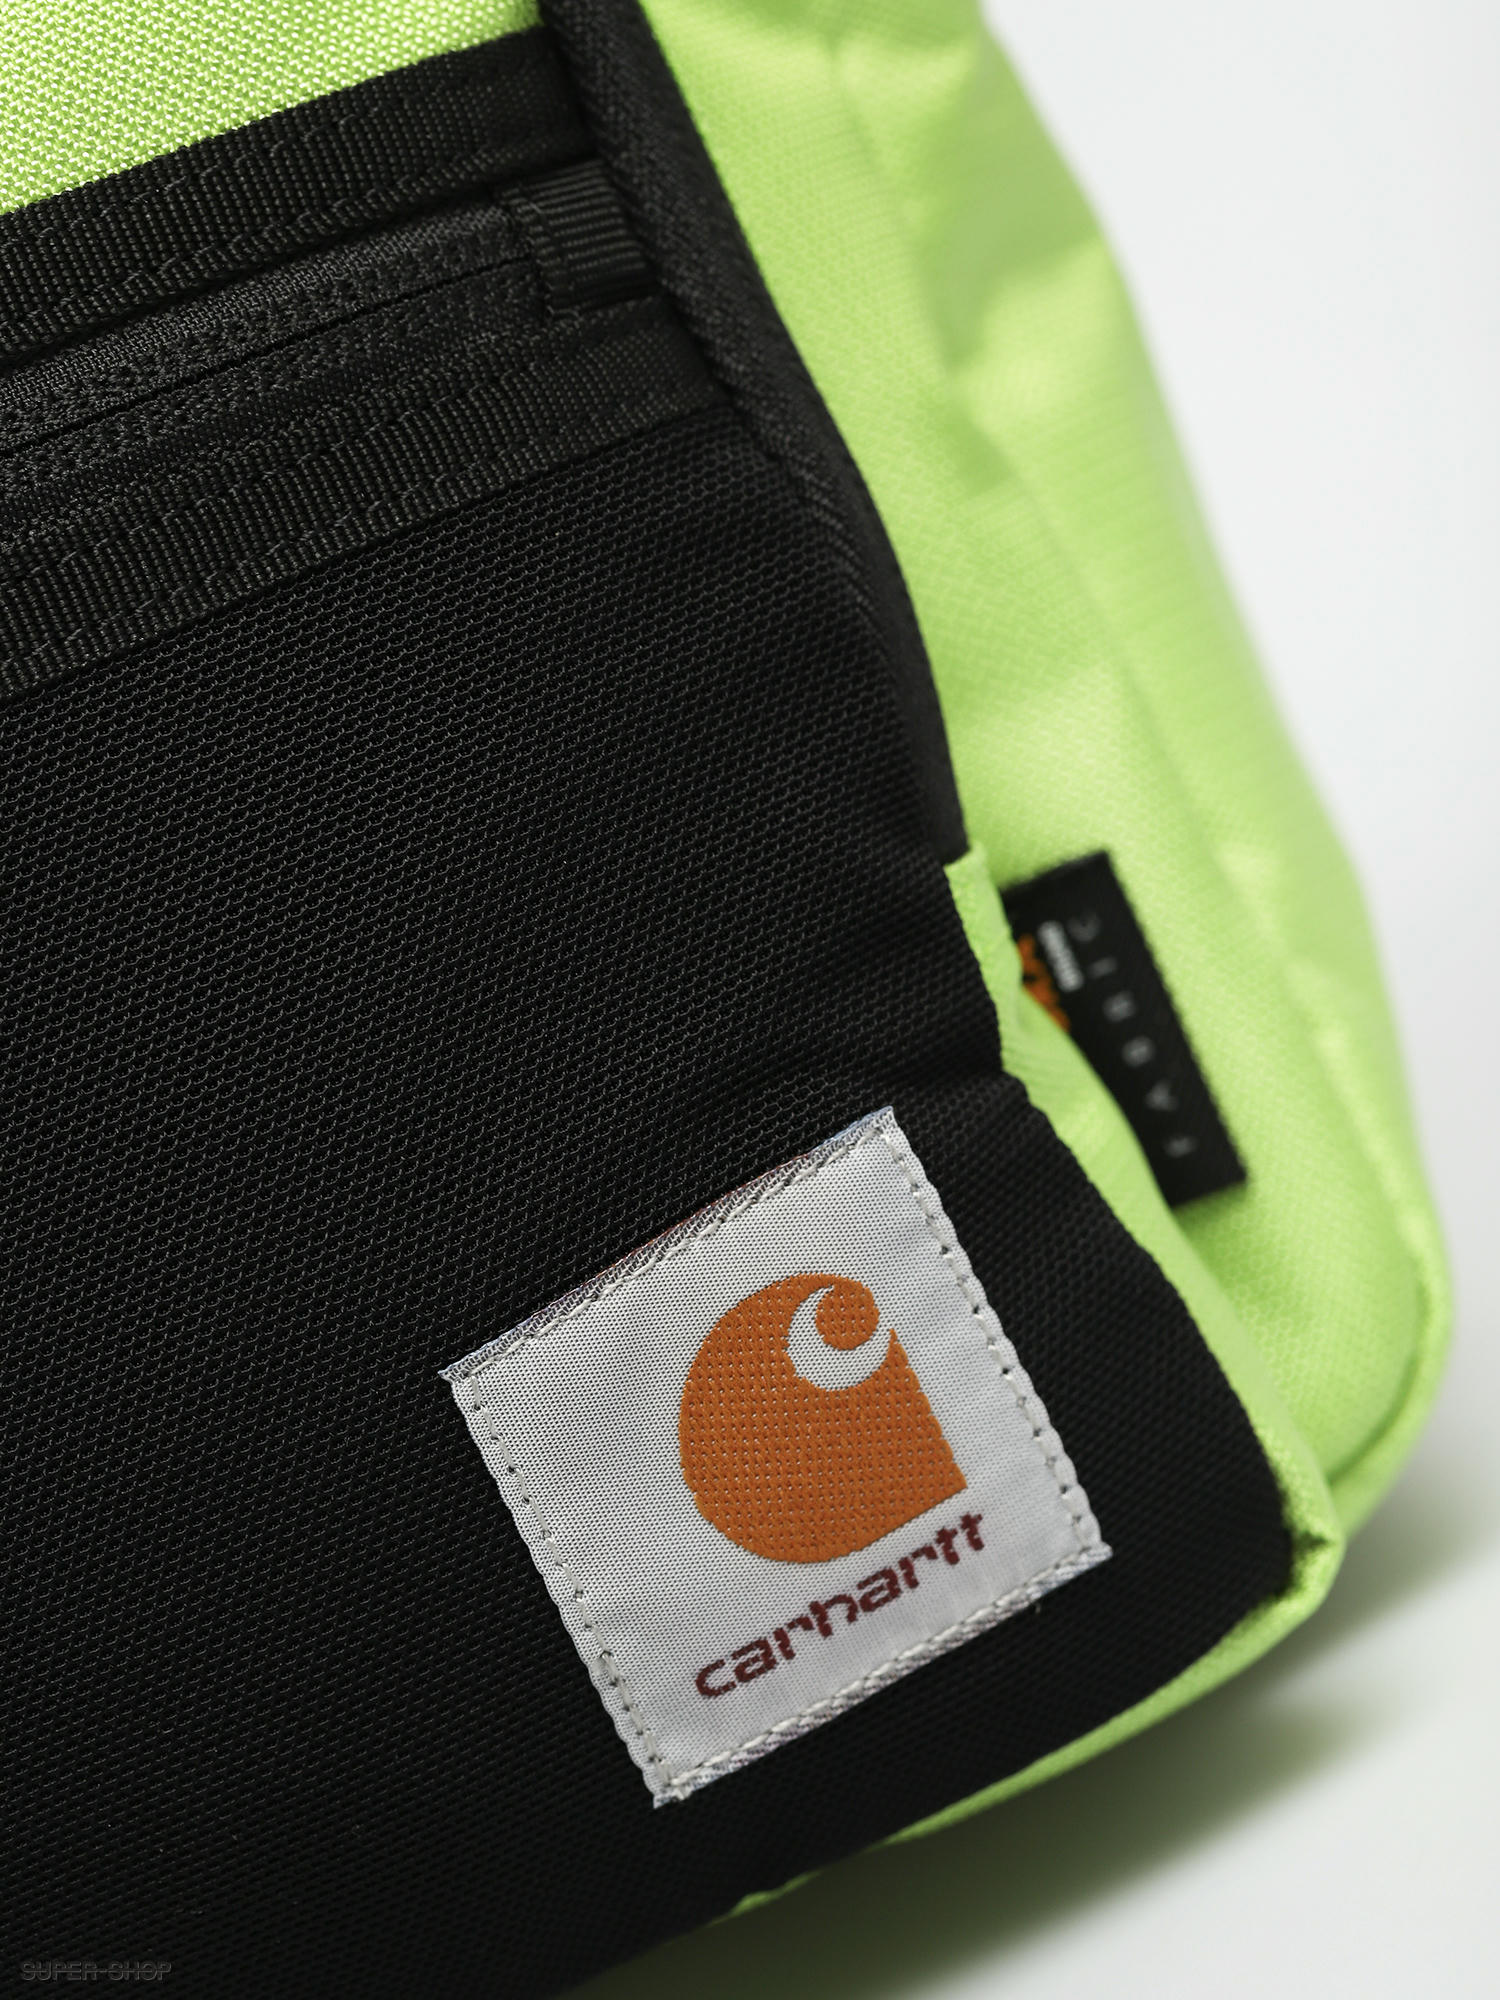 Carhartt WIP Delta Strap Bag Black - Cordura Lime